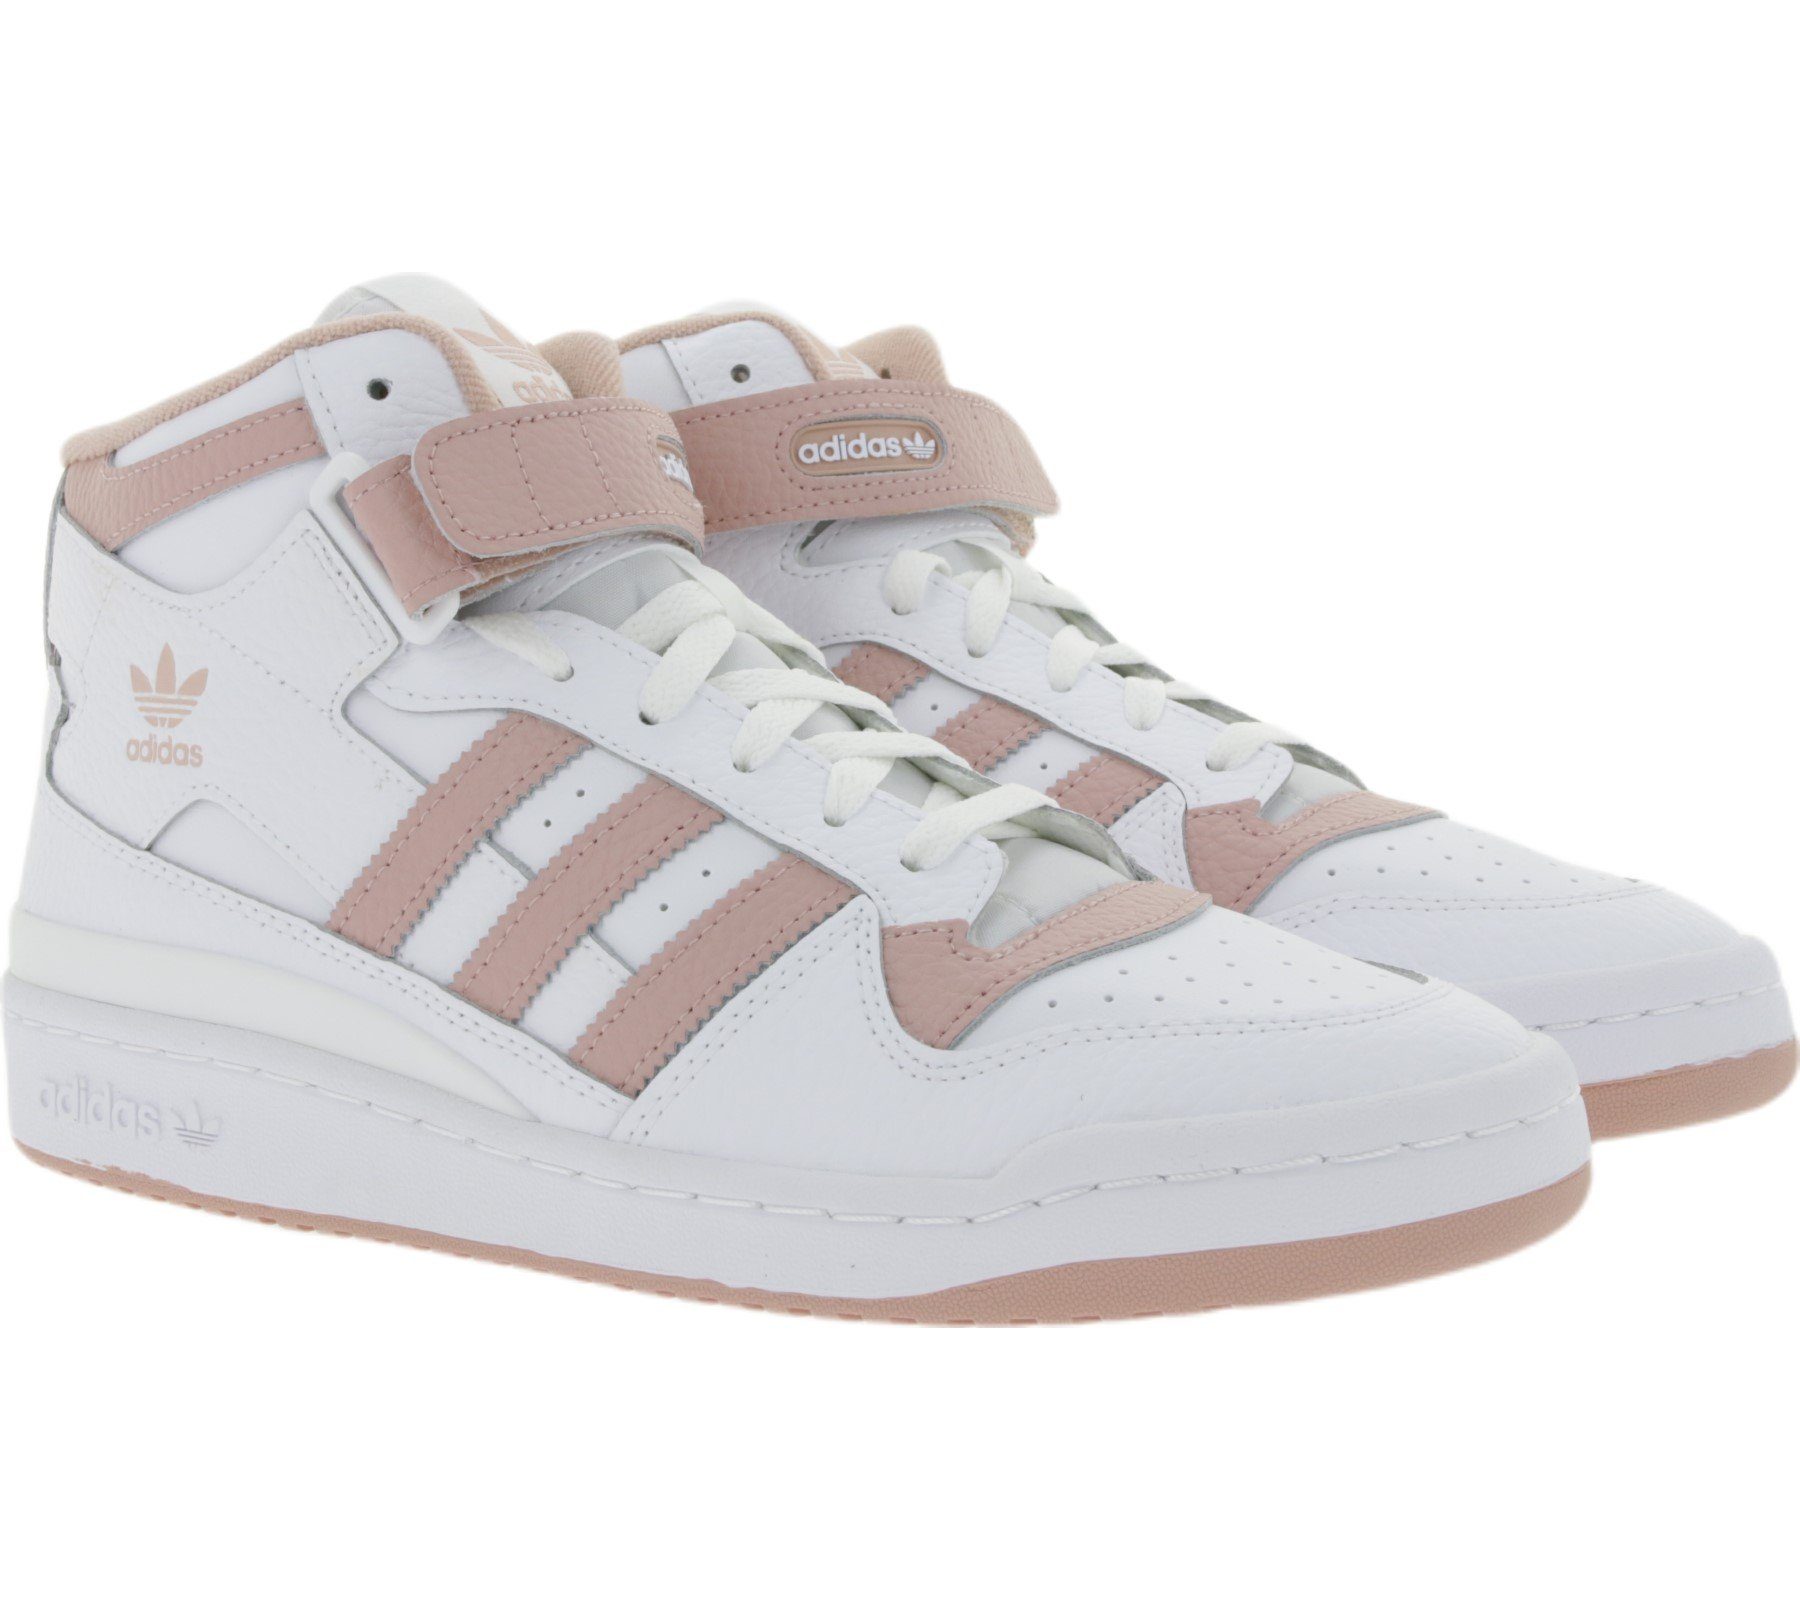 adidas »adidas Herren Basketball-Schuhe knöchelhohe Sneaker im 80s-Style  Forum Mid Turnschuhe Weiß/Rosa« Sneaker online kaufen | OTTO